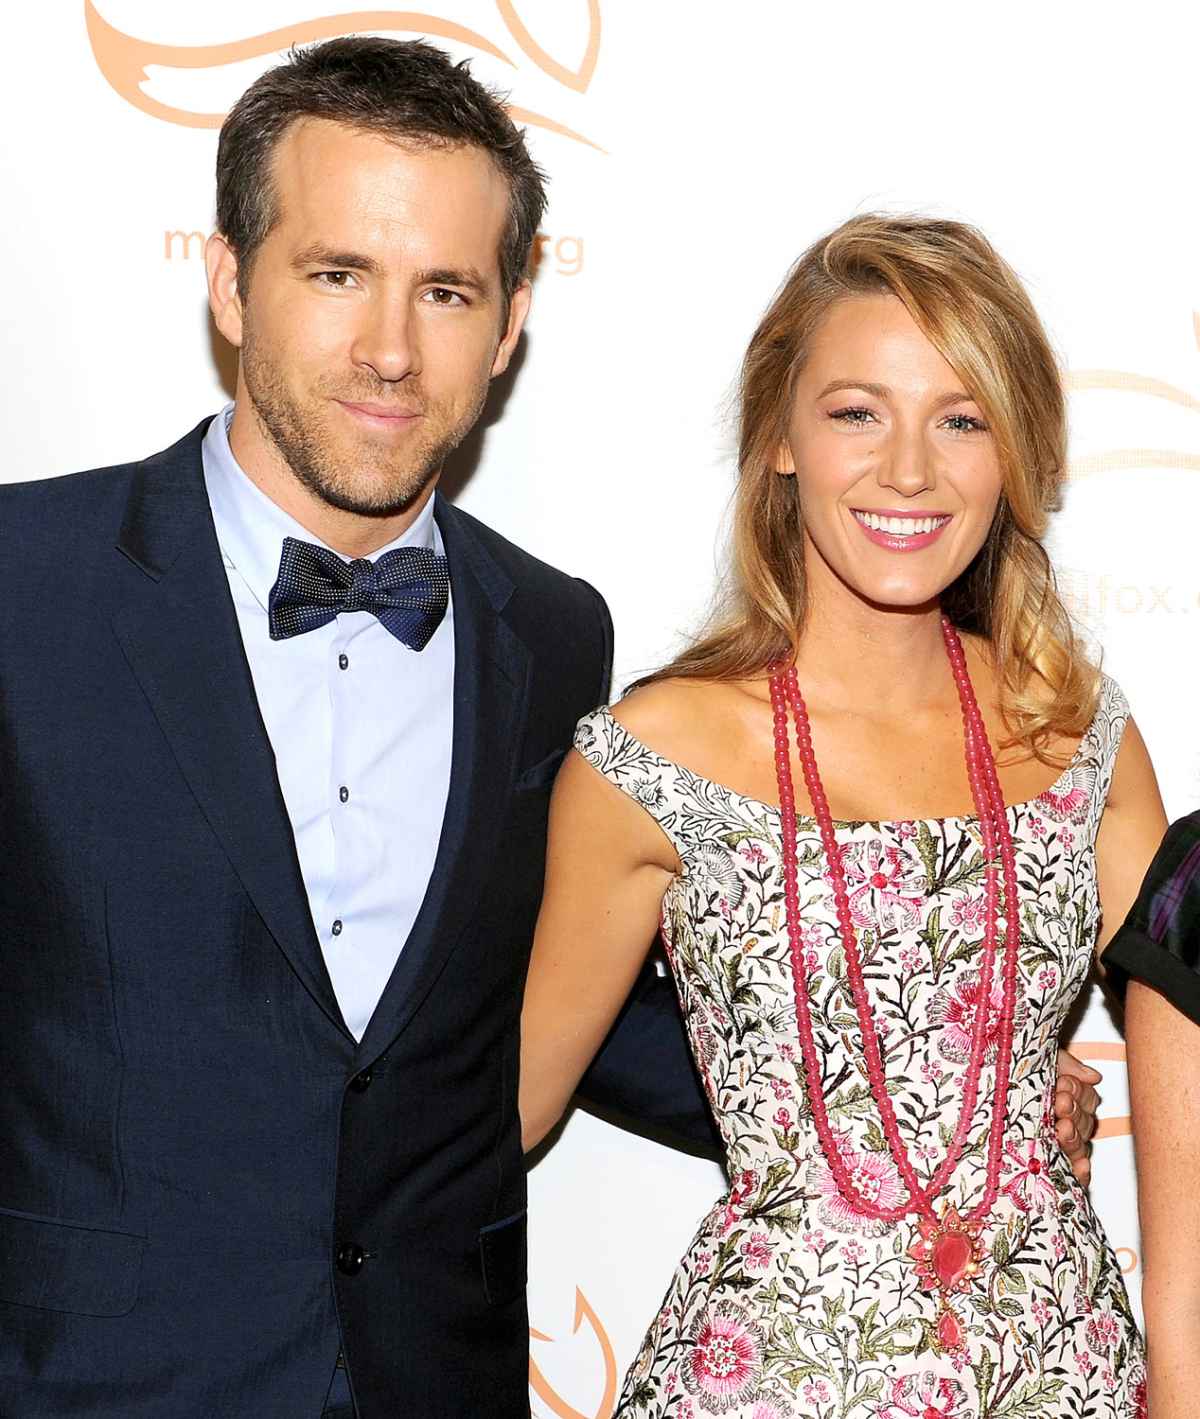 Blake Lively and Ryan Reynolds Relationship Timeline + Photos